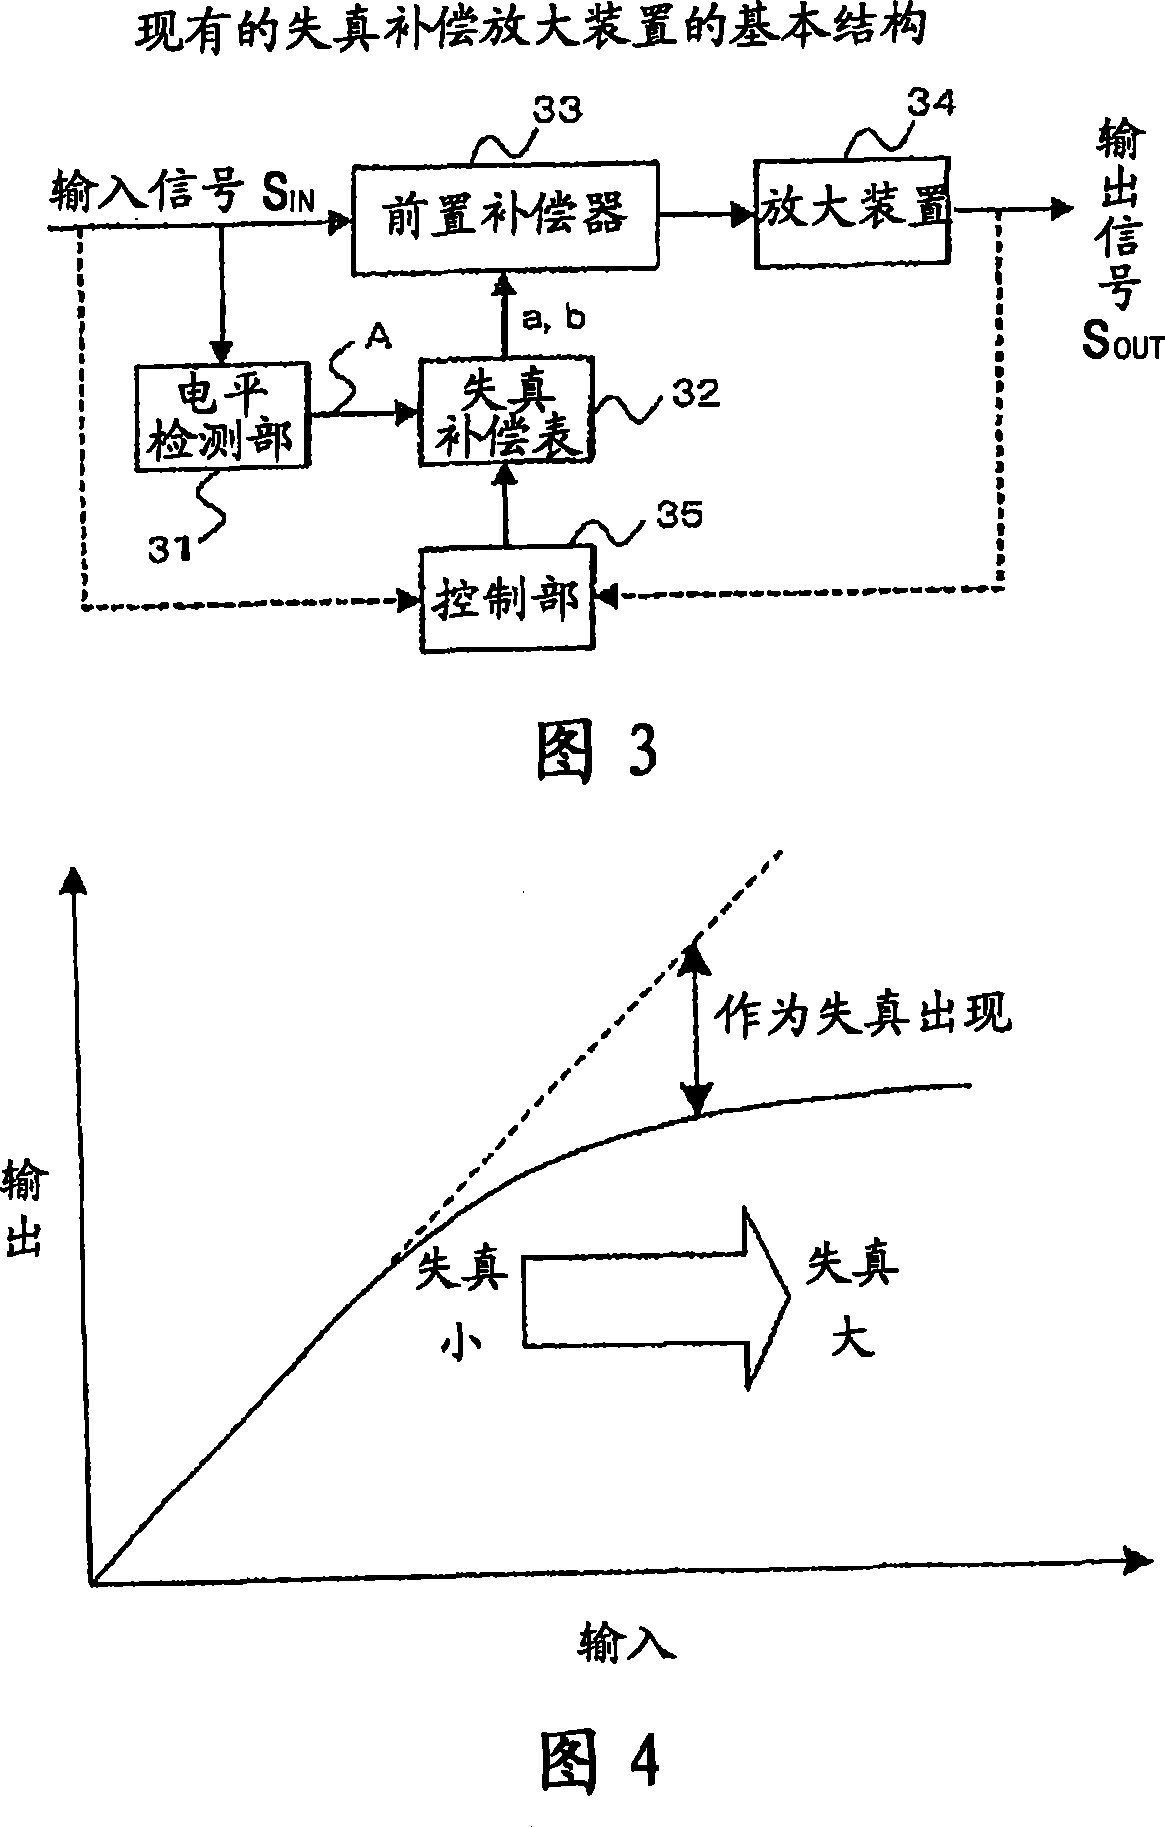 Distortion compensating amplifier apparatus